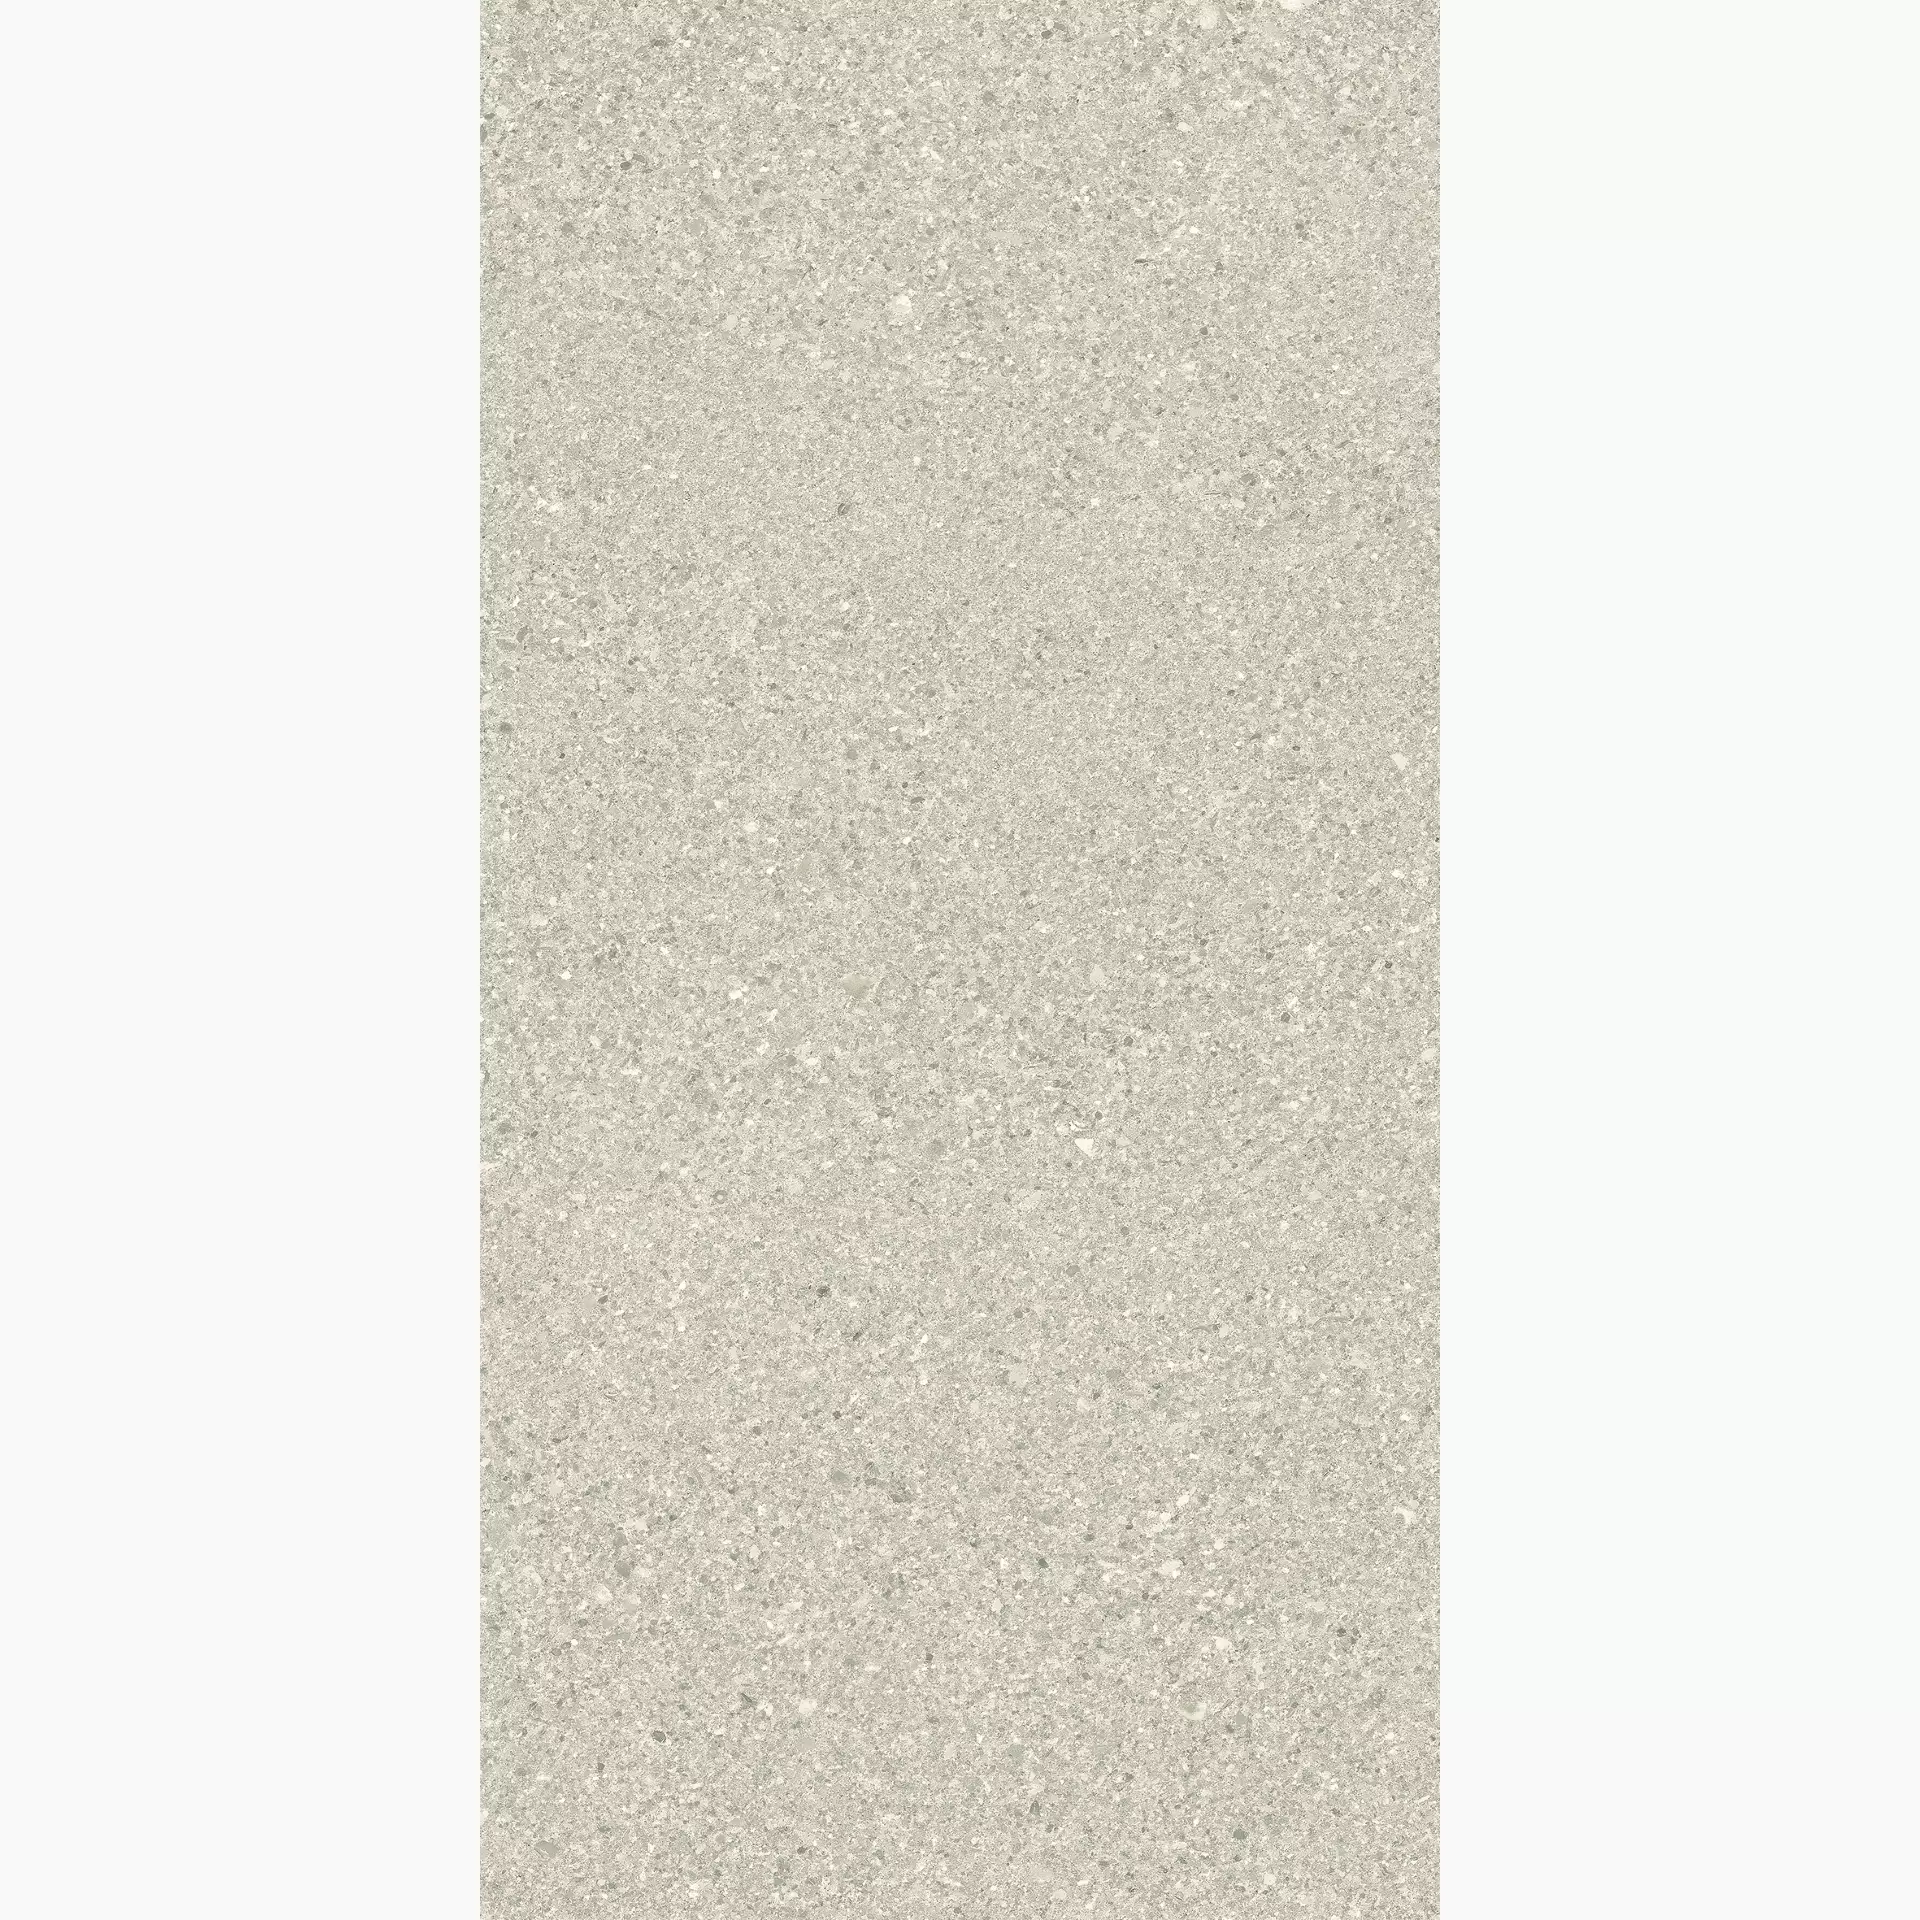 Ergon Grain Stone Rough Grain Sand Naturale E0CM 30x60cm rectified 9,5mm